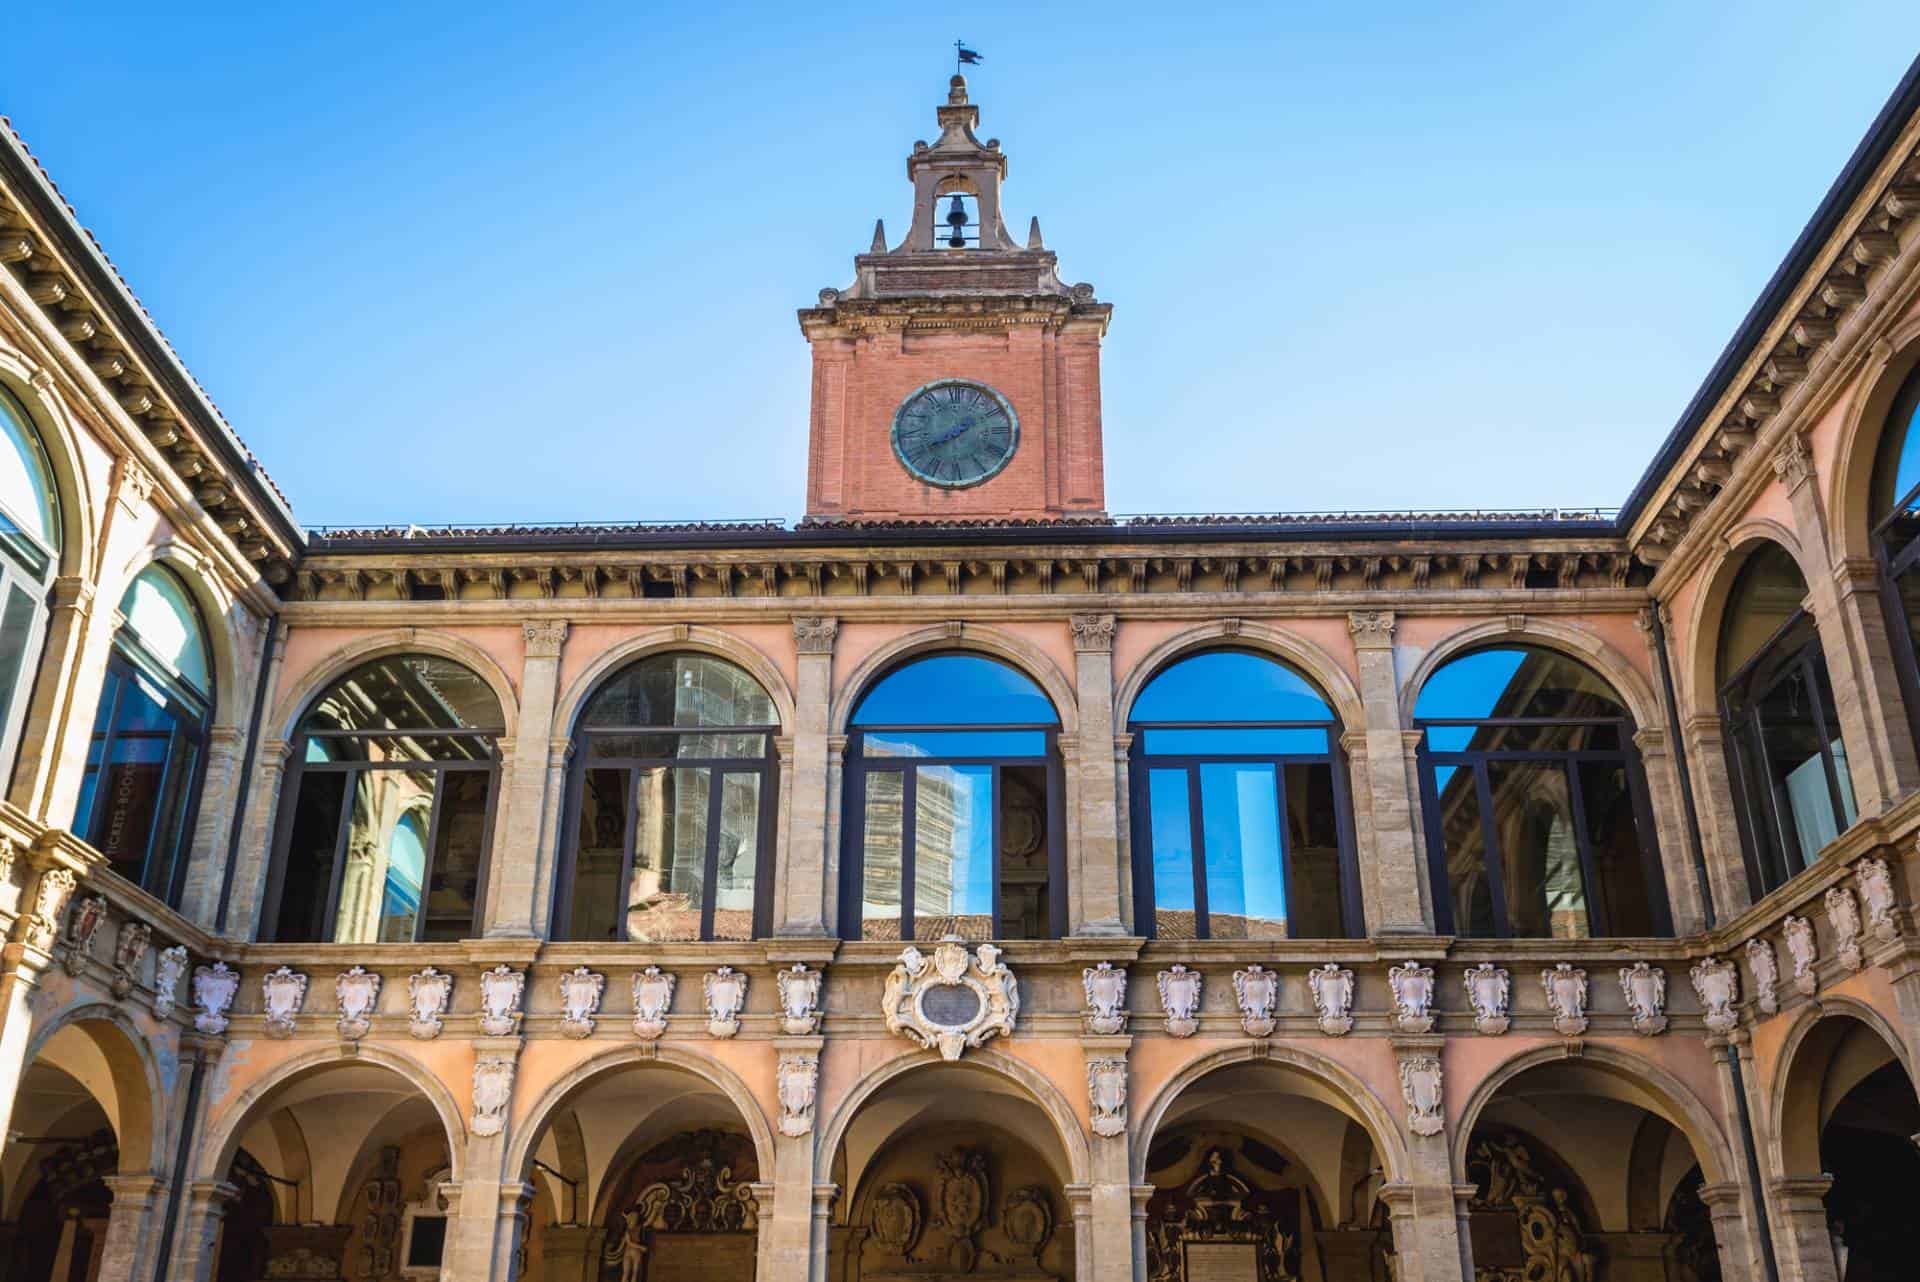 Archiginnasio, University of Bologna's historic main building, in Bologna, Italy.